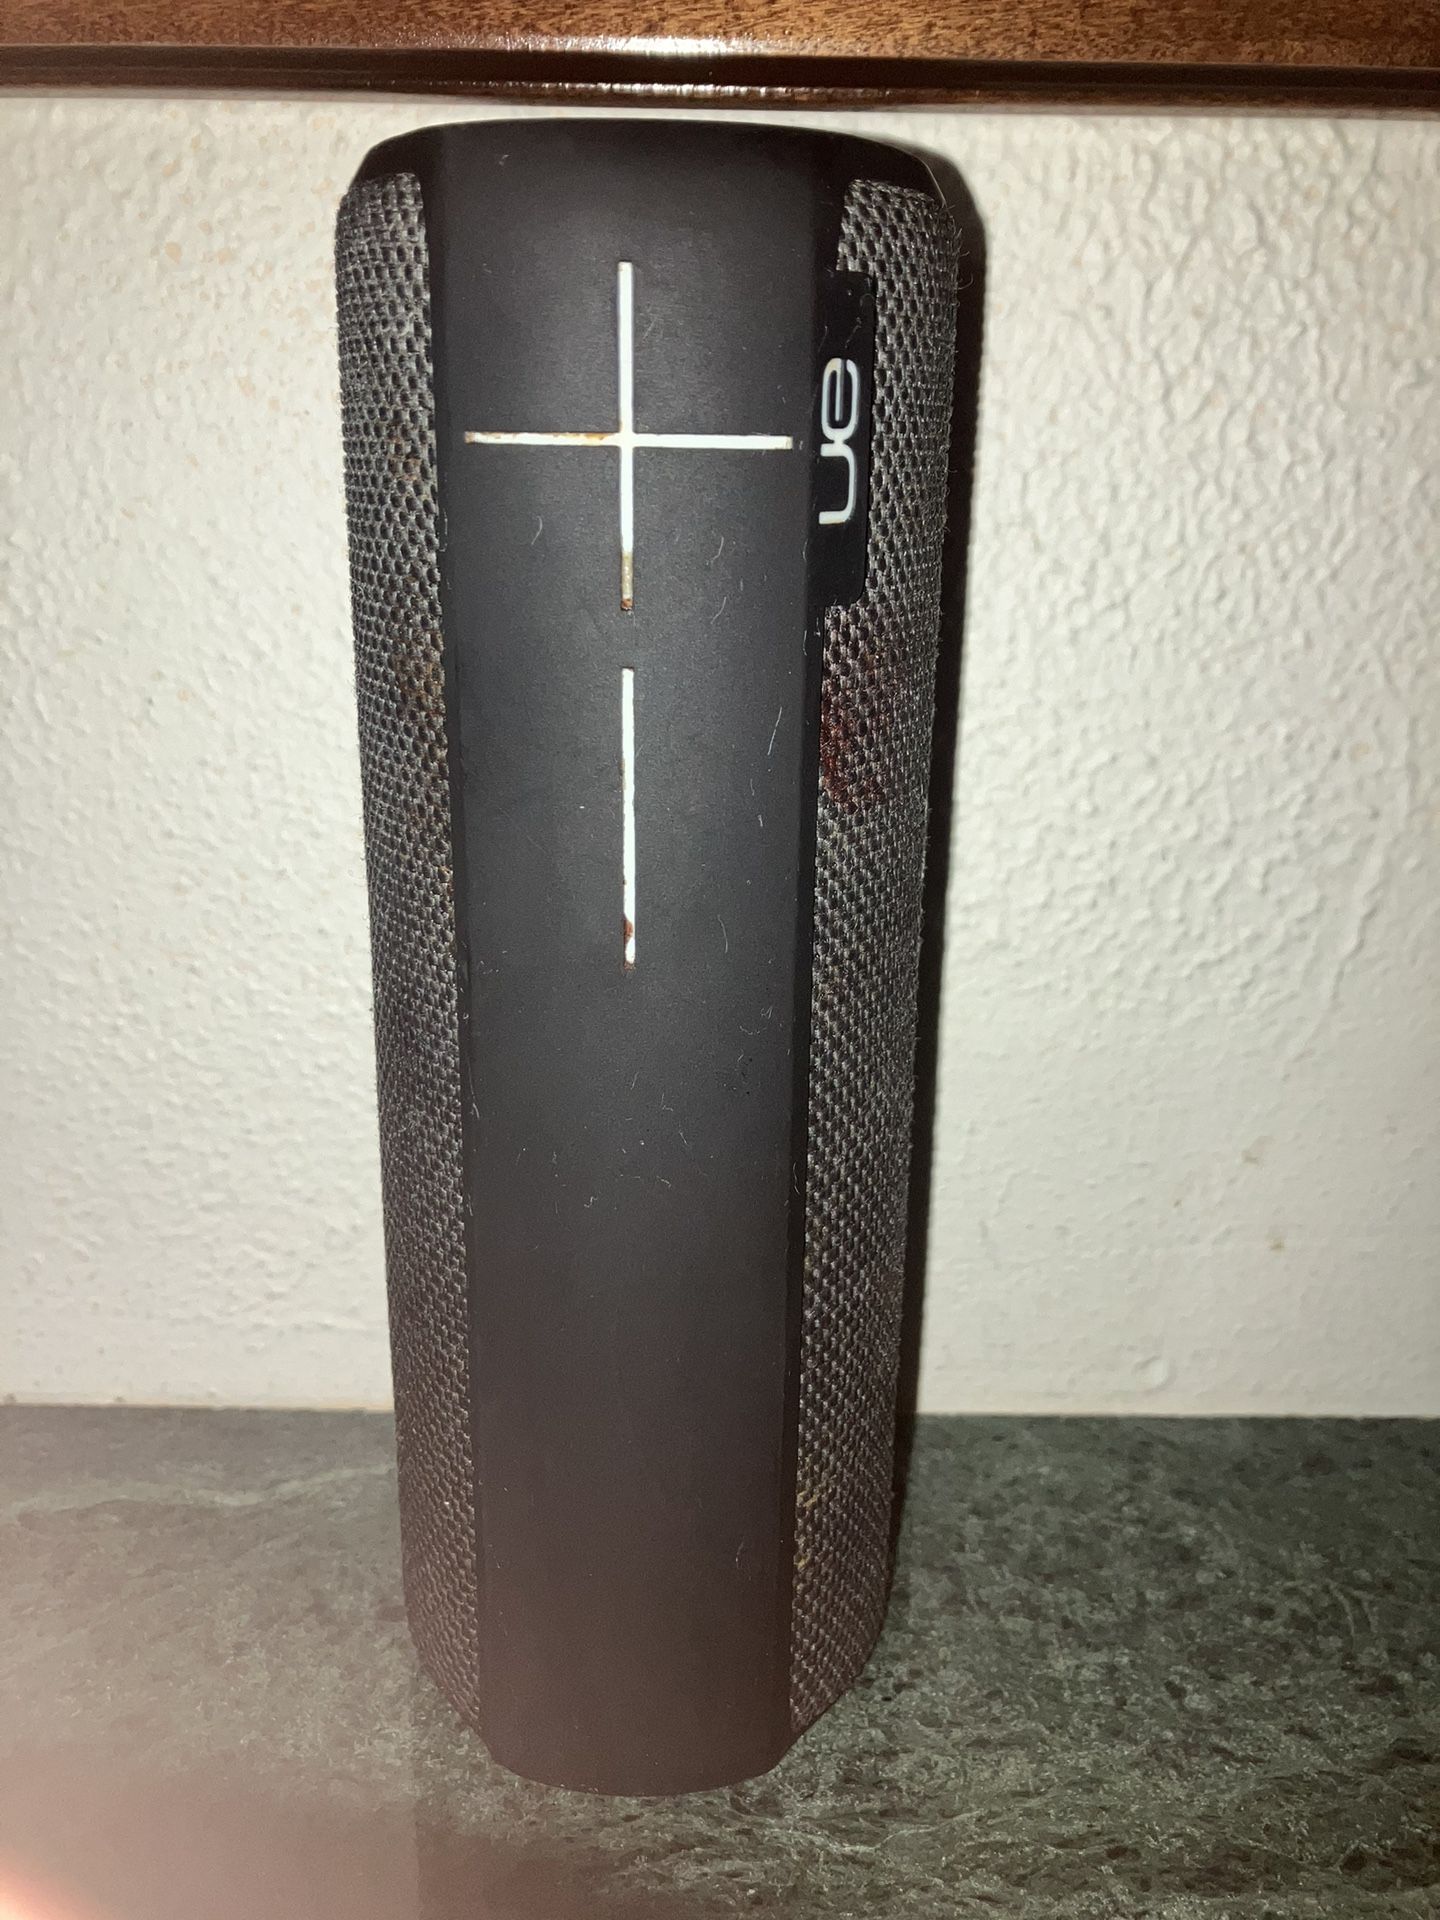 UE Logitech Boom 2 Bluetooth Portable Speaker- Black